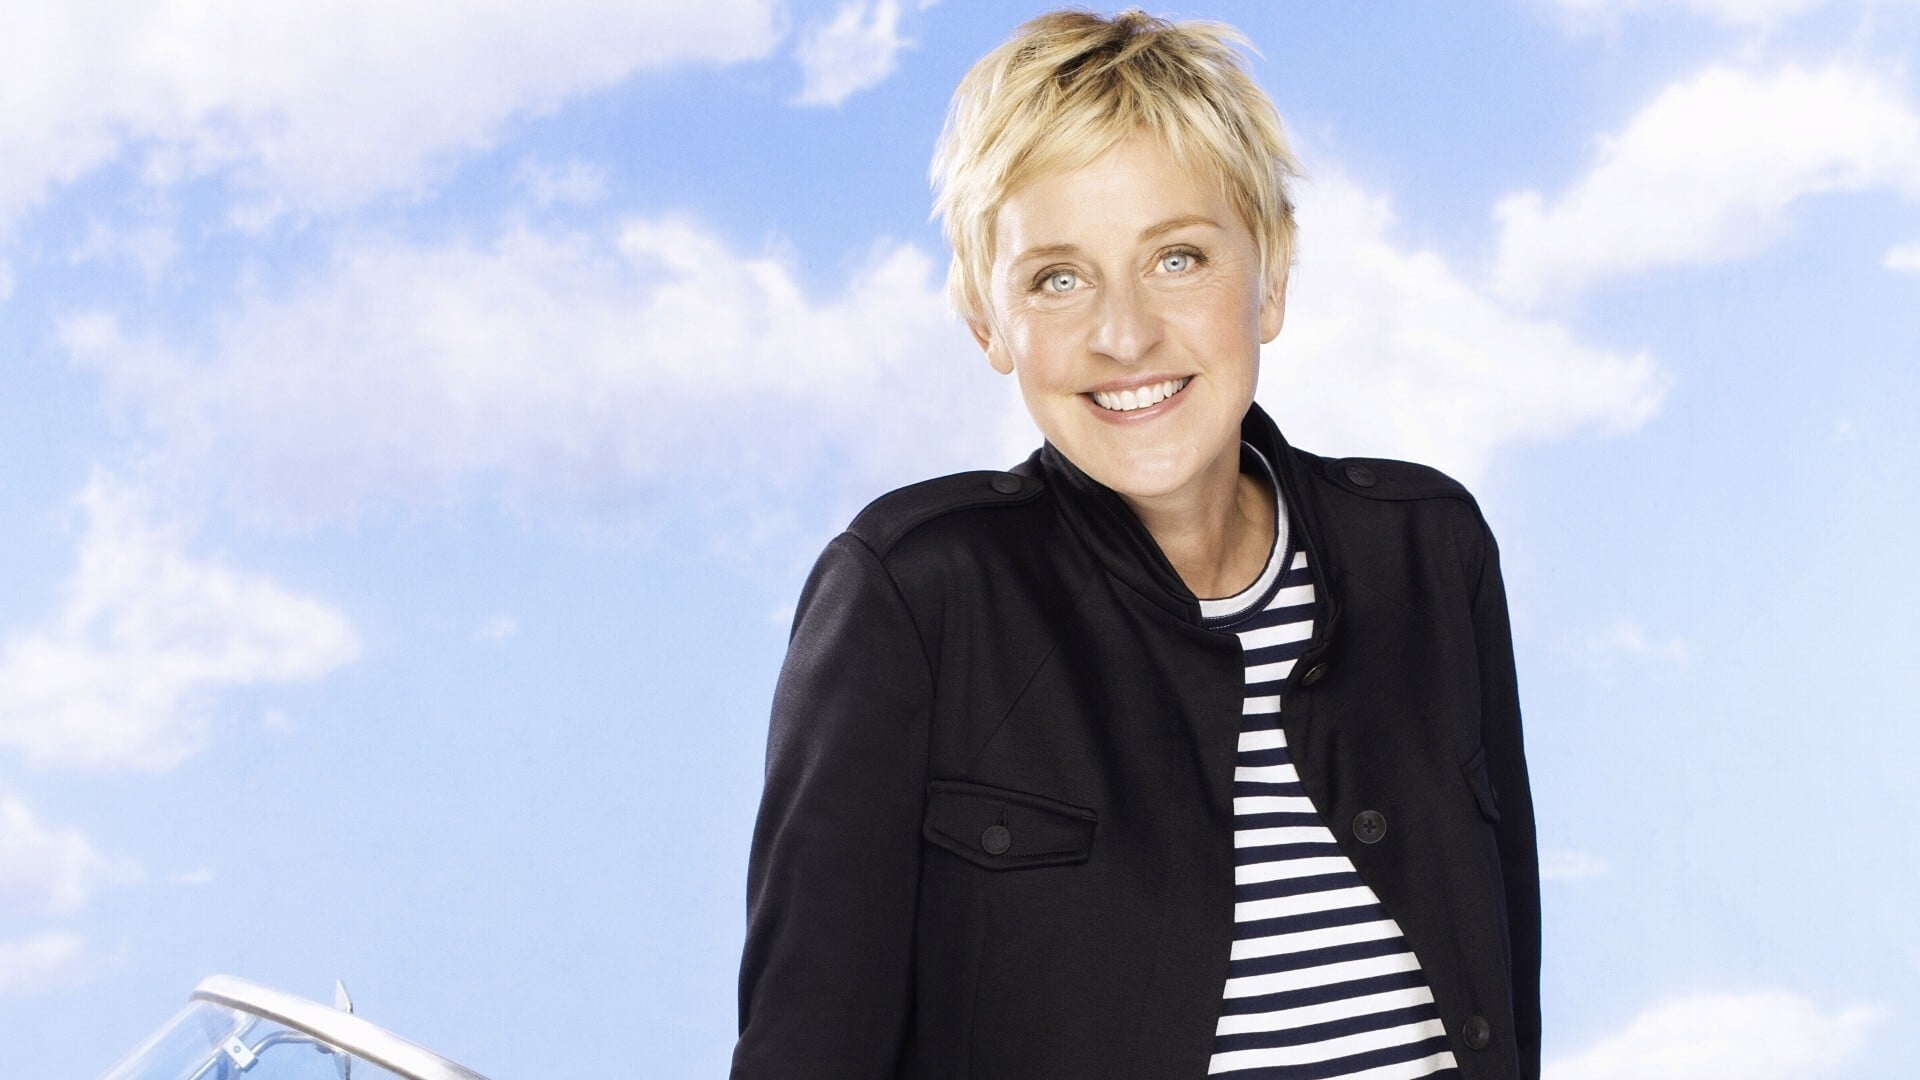 The Ellen DeGeneres Show - Season 14 Episode 63 : Day 9 of 12 Days, Justin Bieber, Felicity Jones, the cast of 'Fuller House'